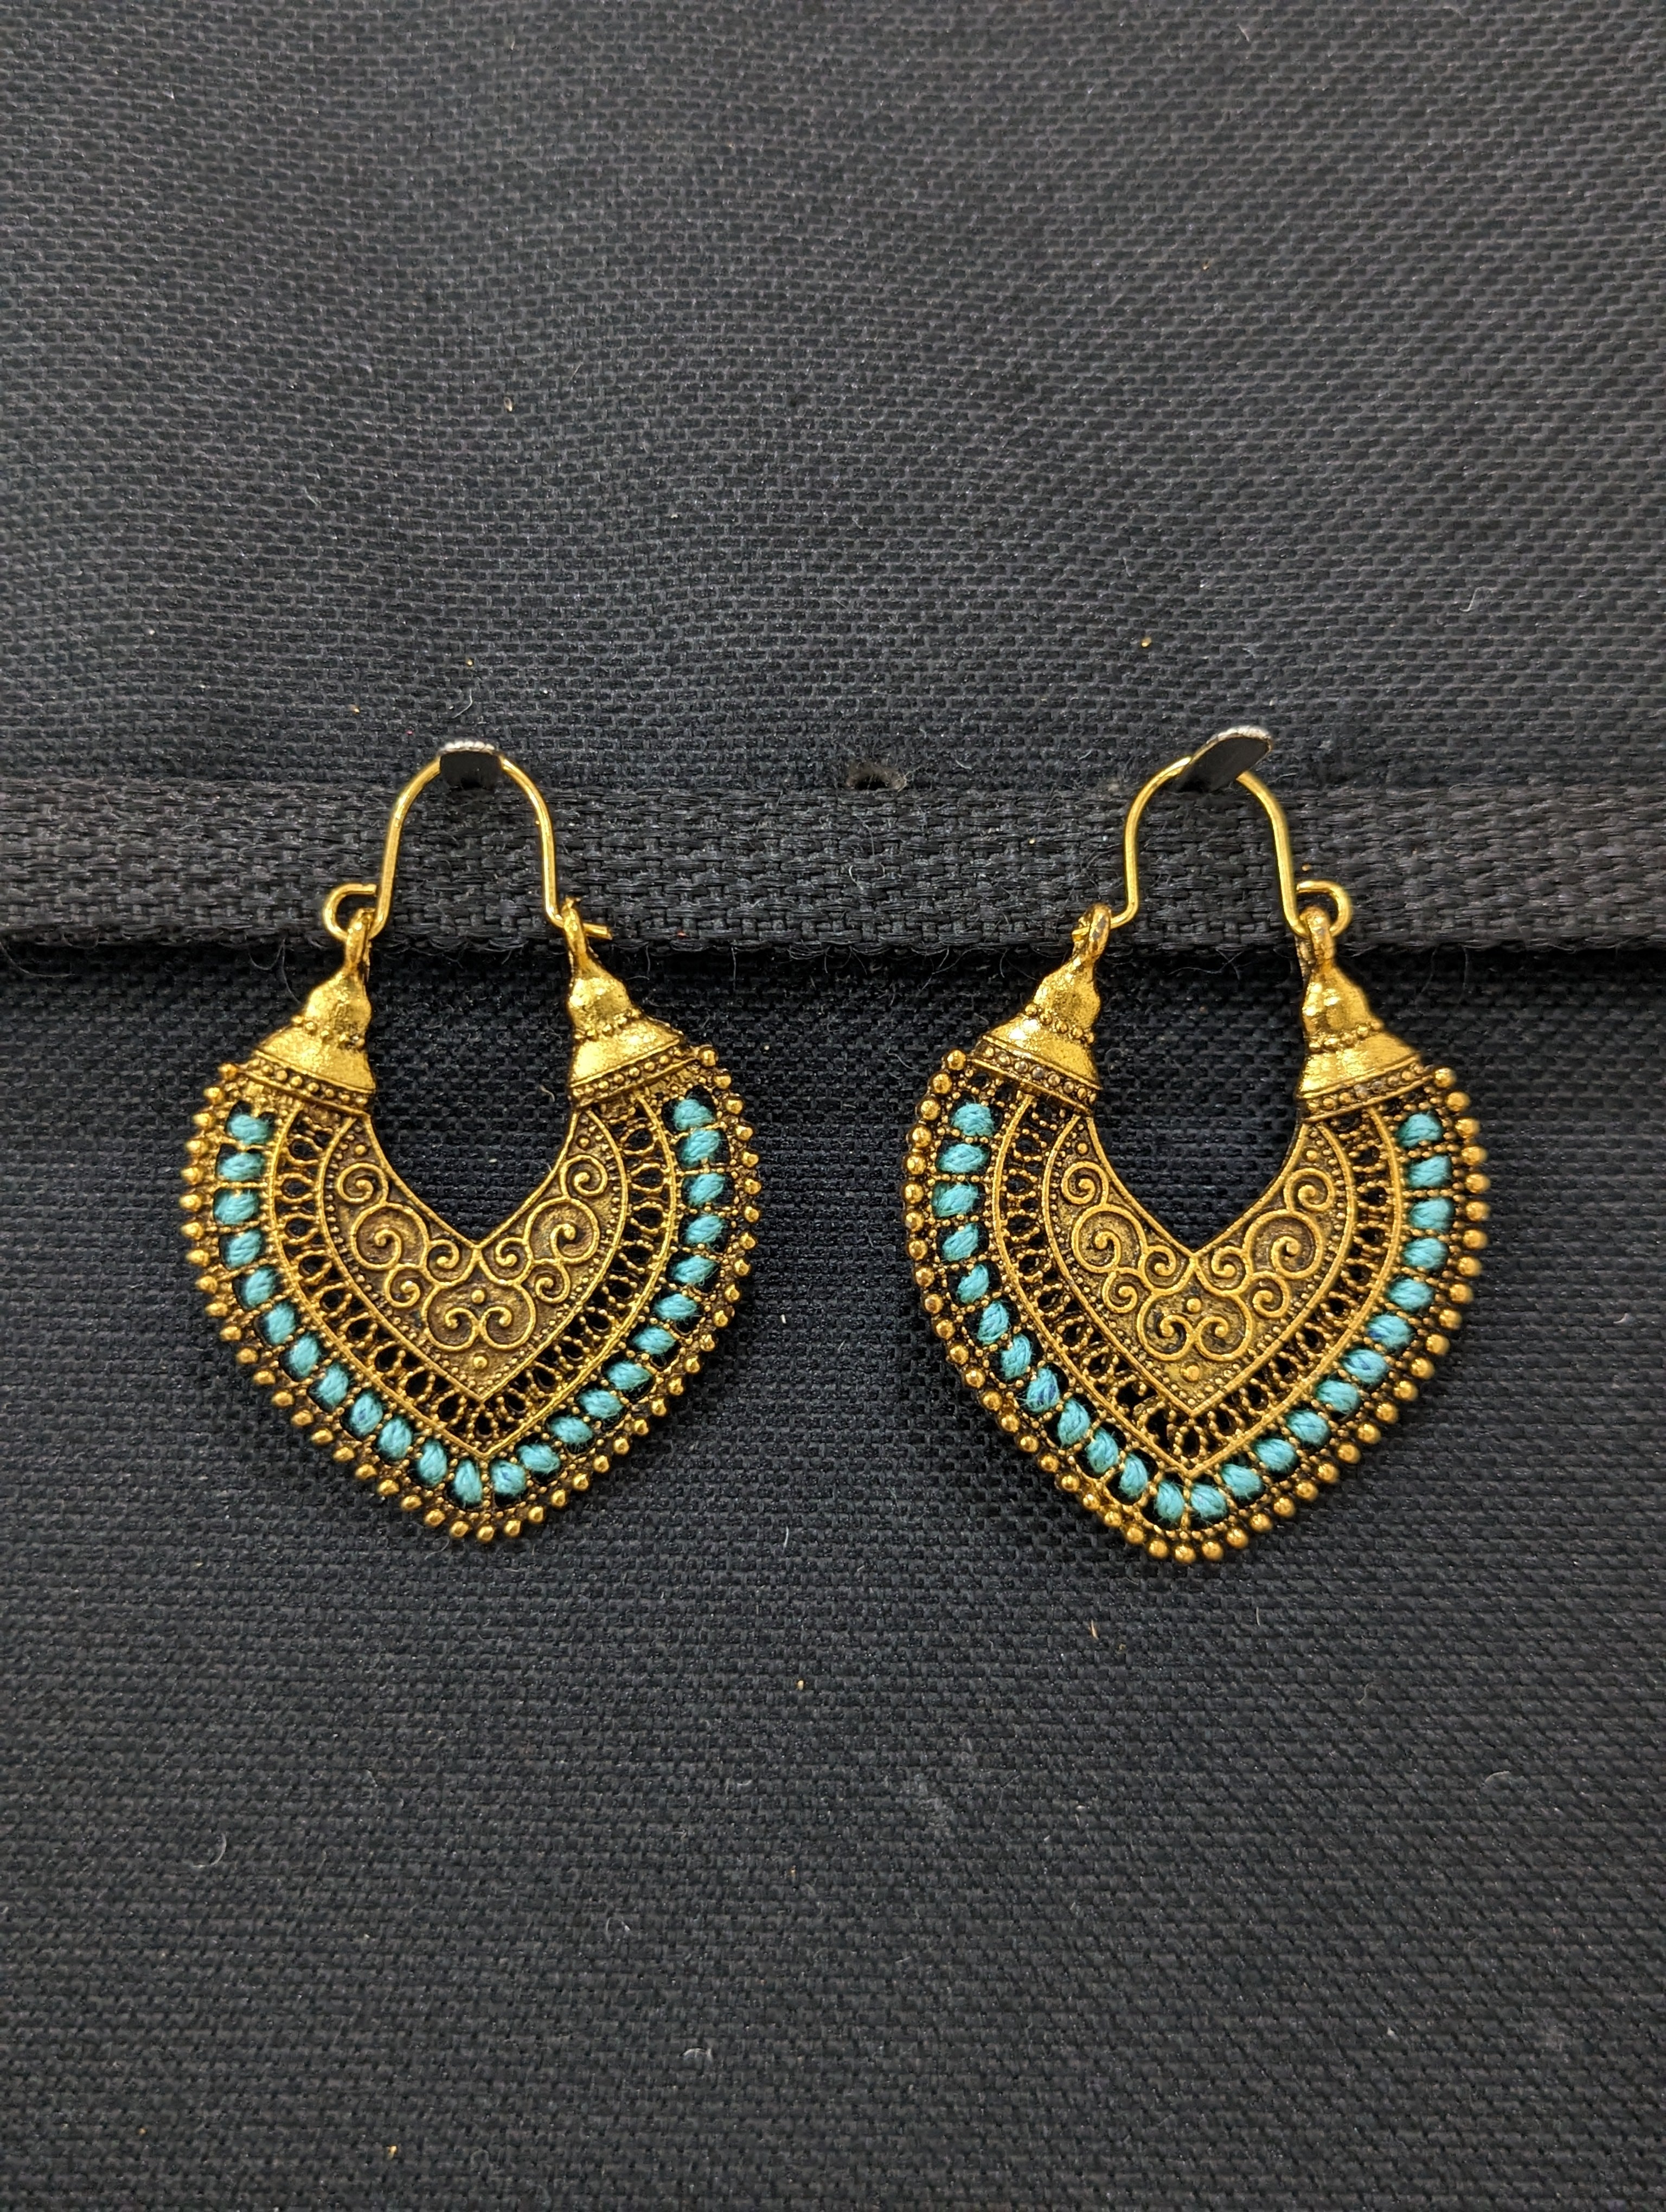 Antique Earrings - Buy Antique Earrings online in India